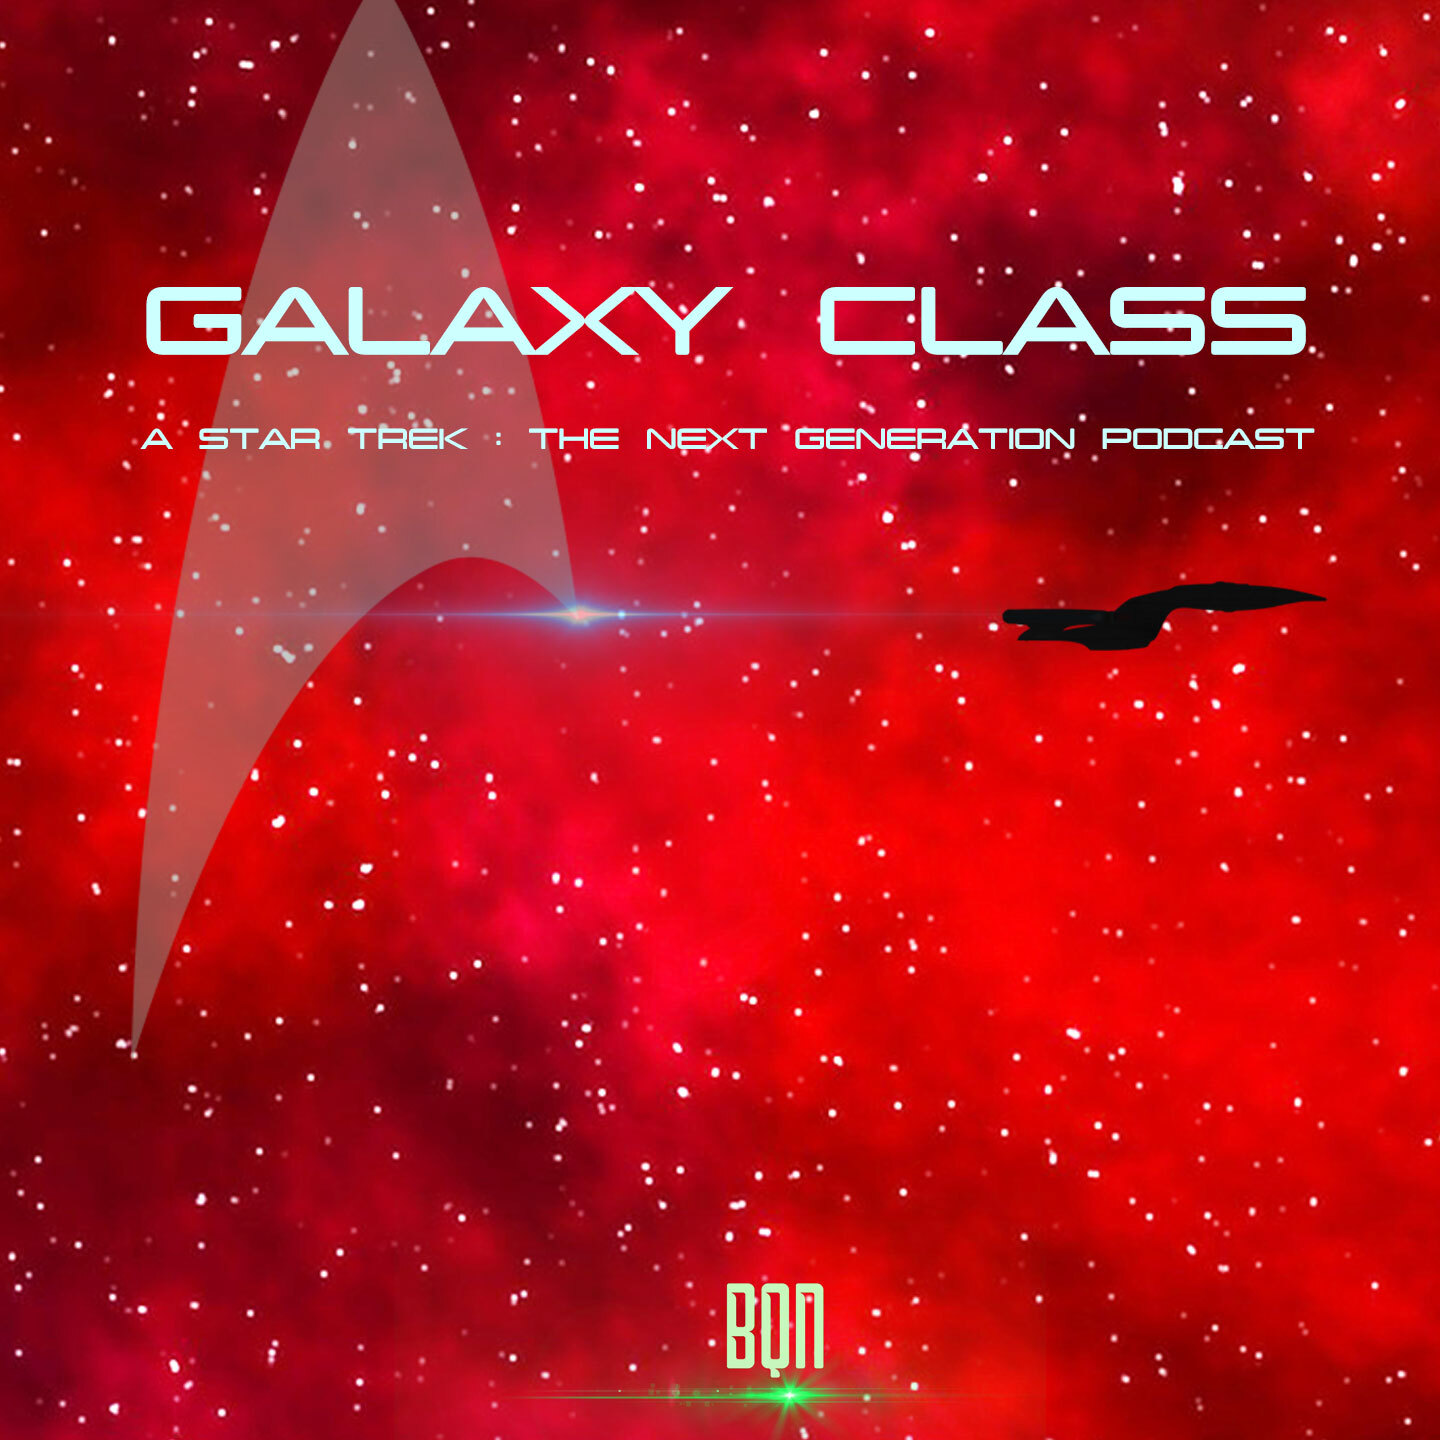 Galaxy Class A Star Trek The Next Generation Podcast